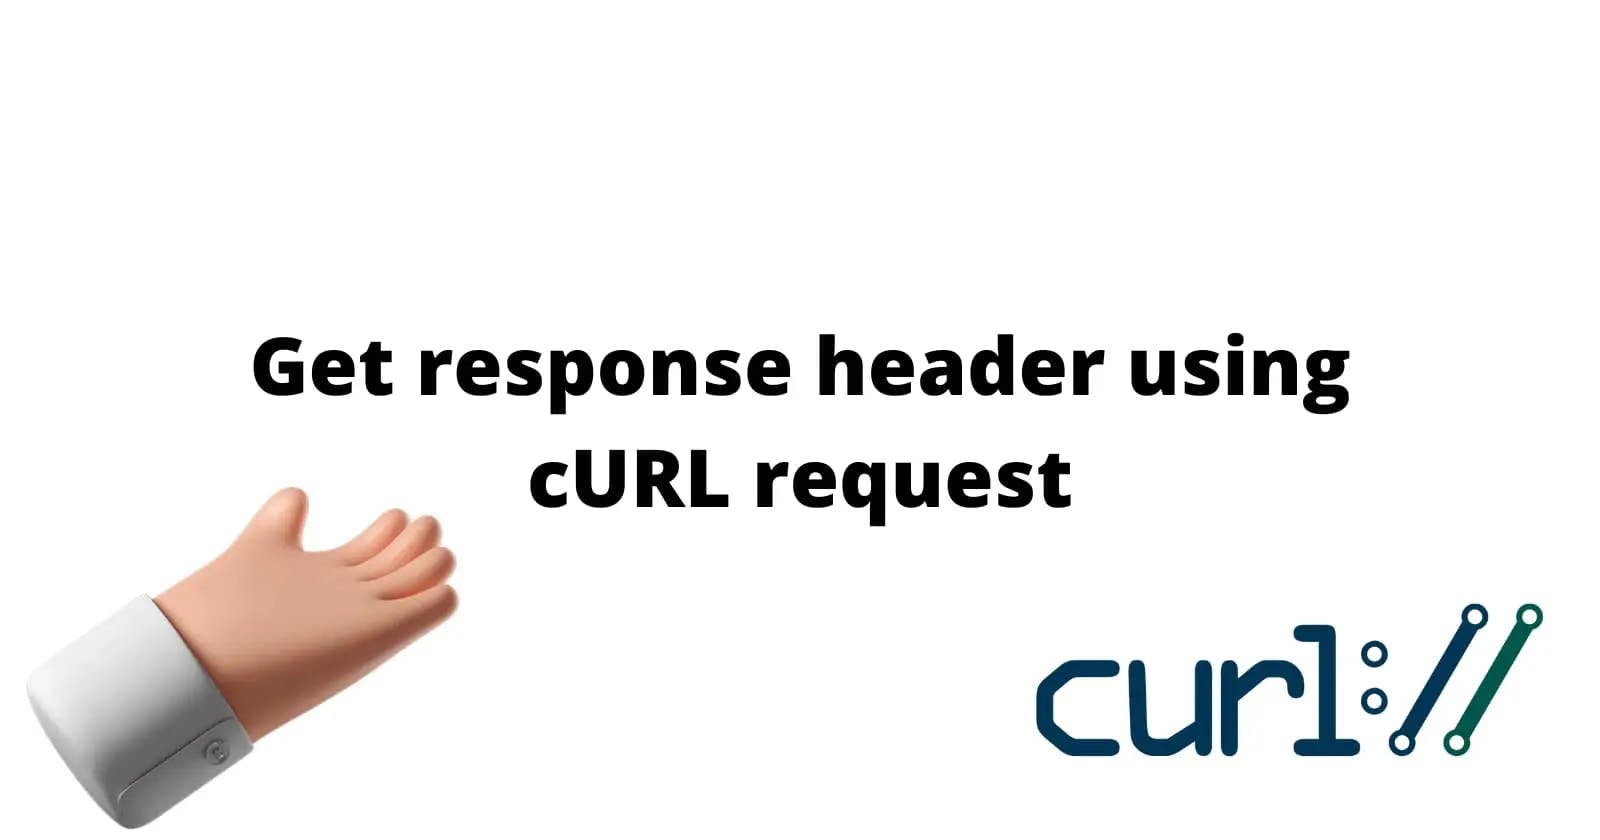 Get response header using cURL request